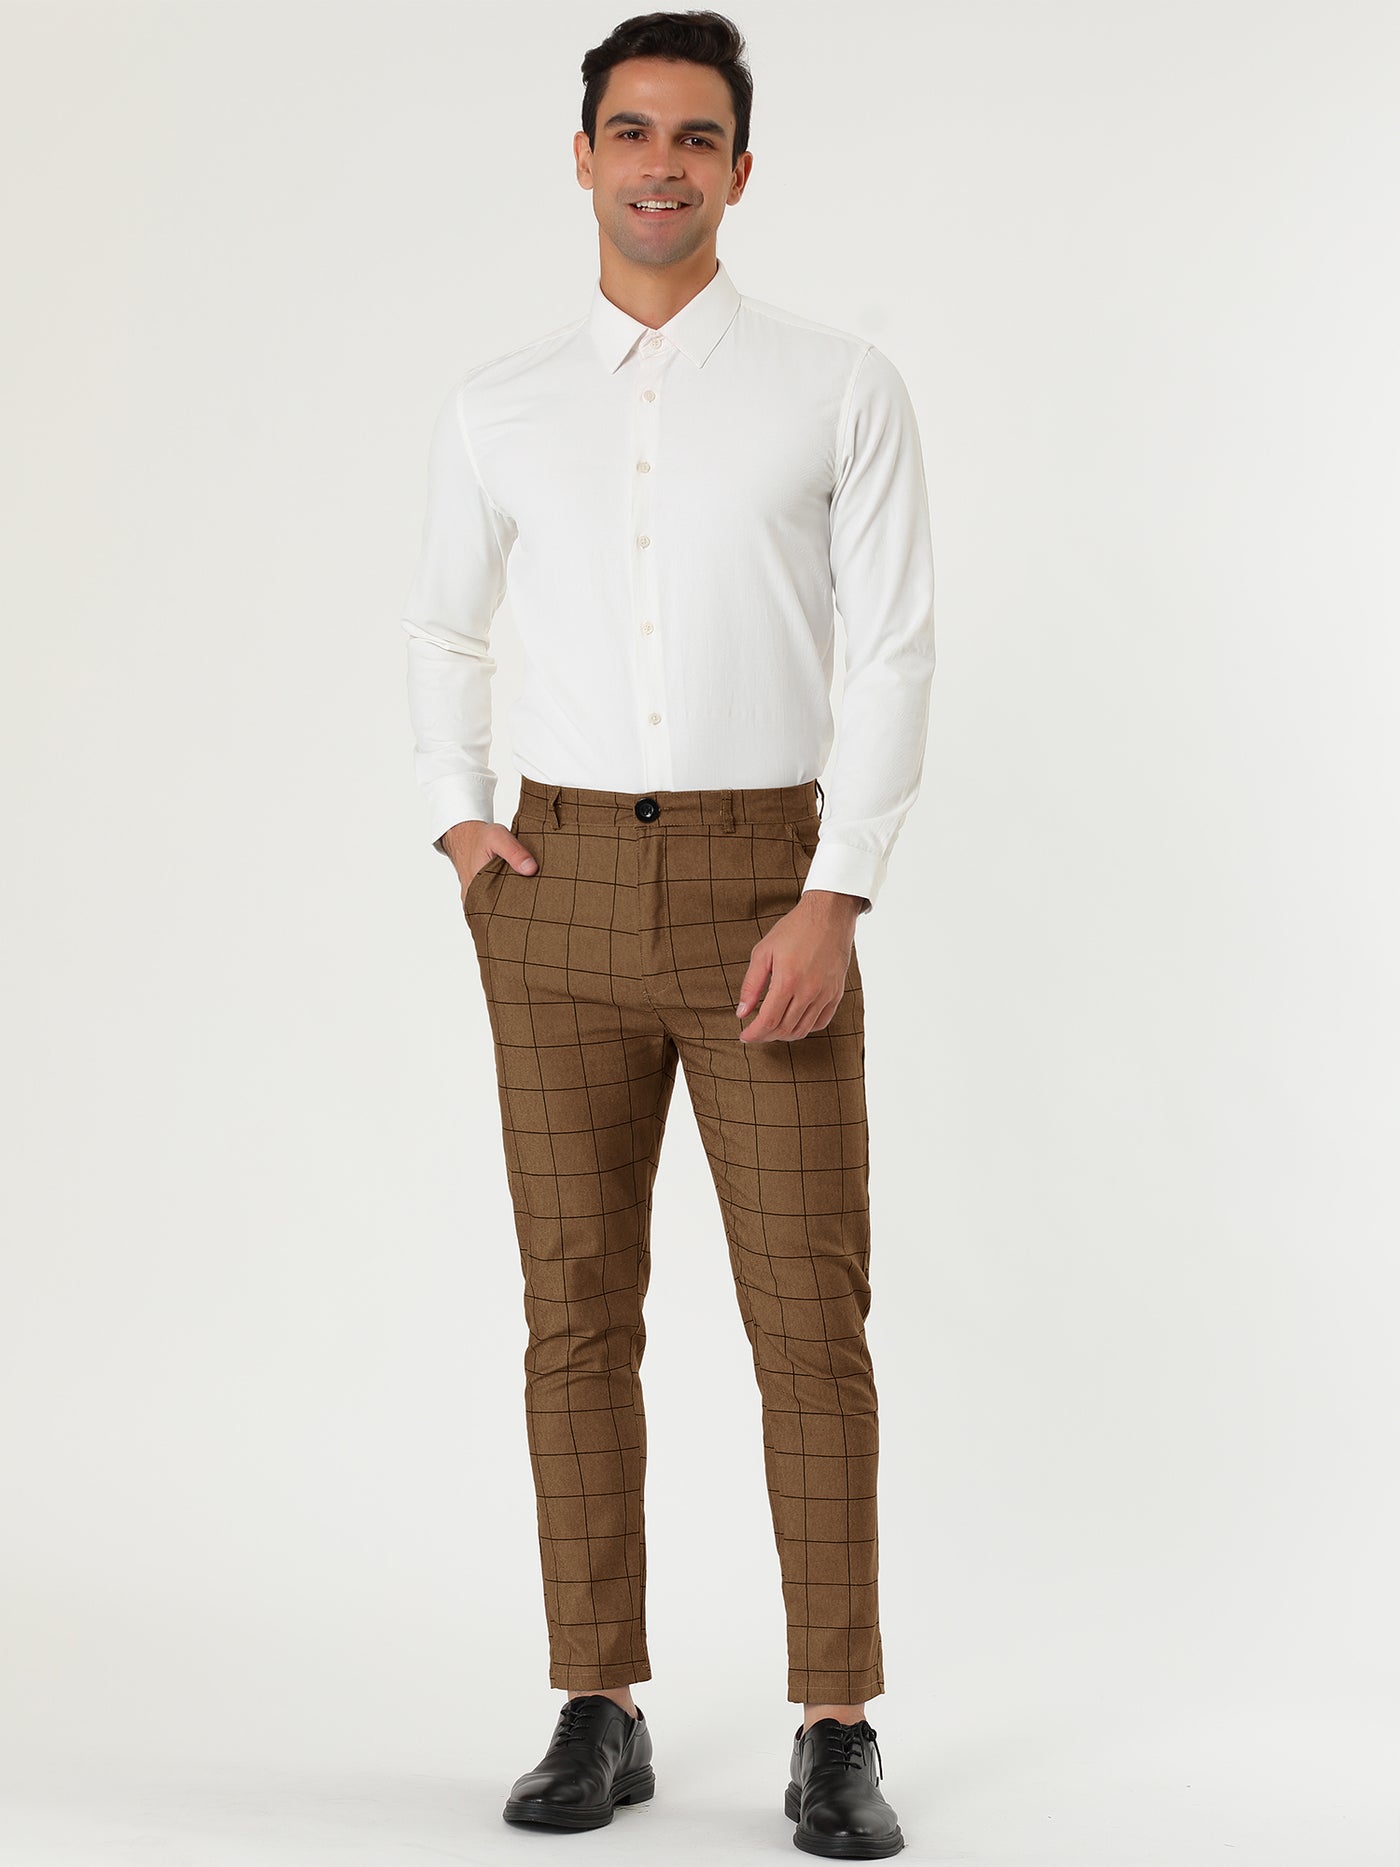 Bublédon Plaid Printed Chino Smart Casual Men Dress Pants